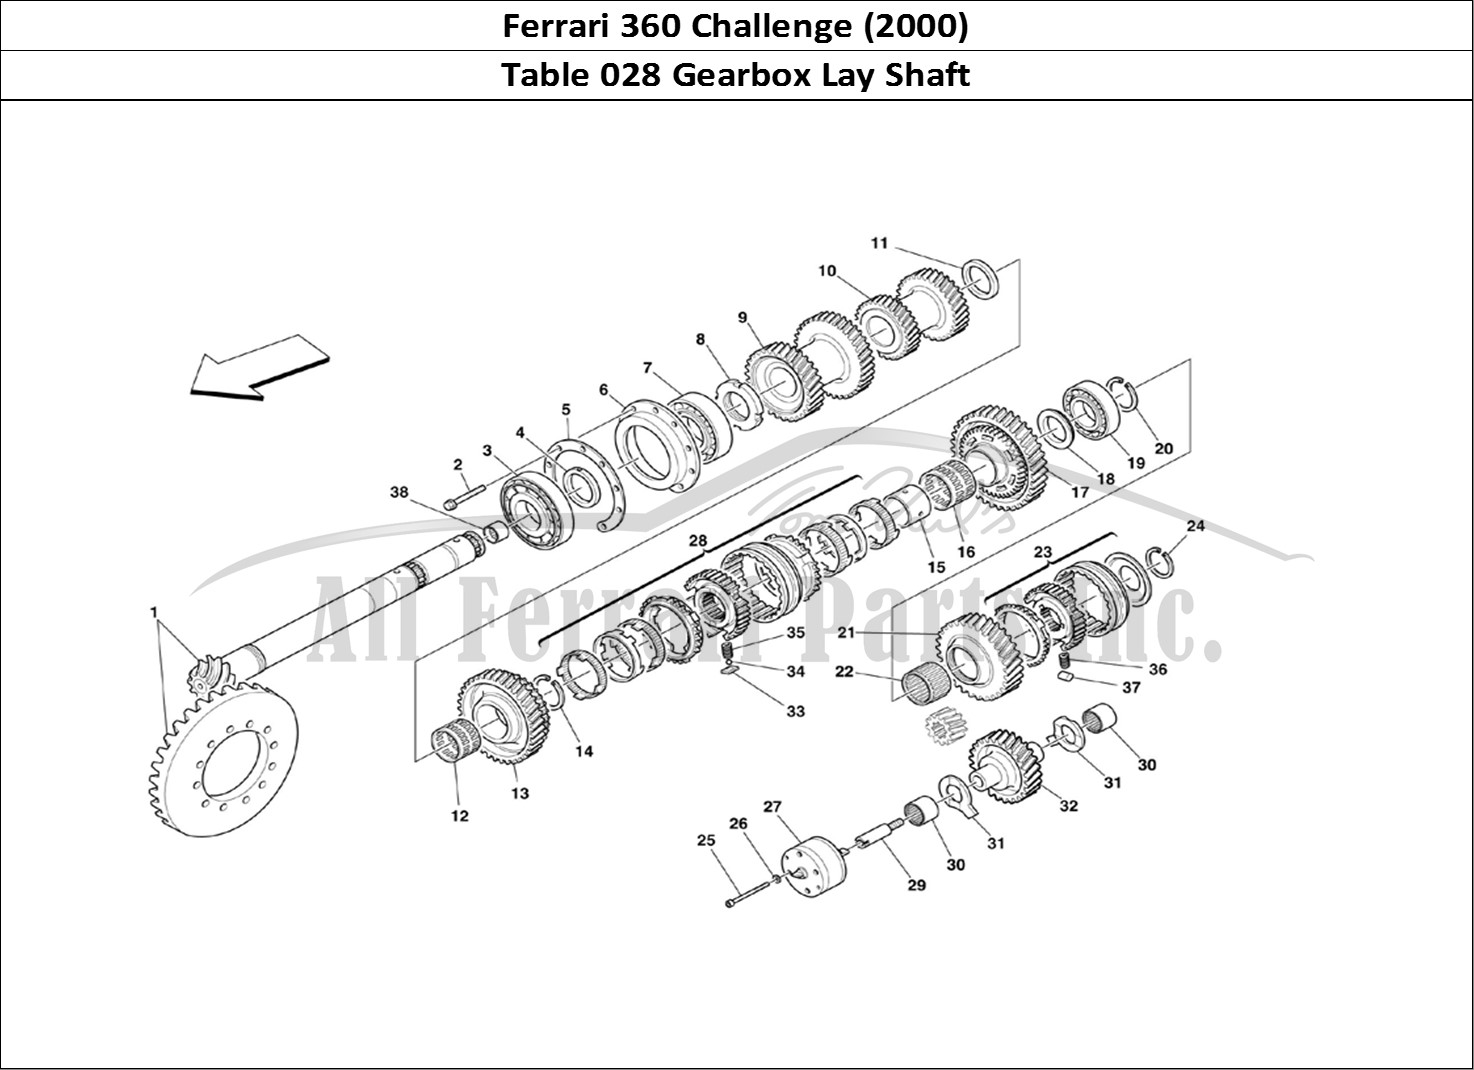 Ferrari Parts Ferrari 360 Challenge (2000) Page 028 Lay Shaft Gears